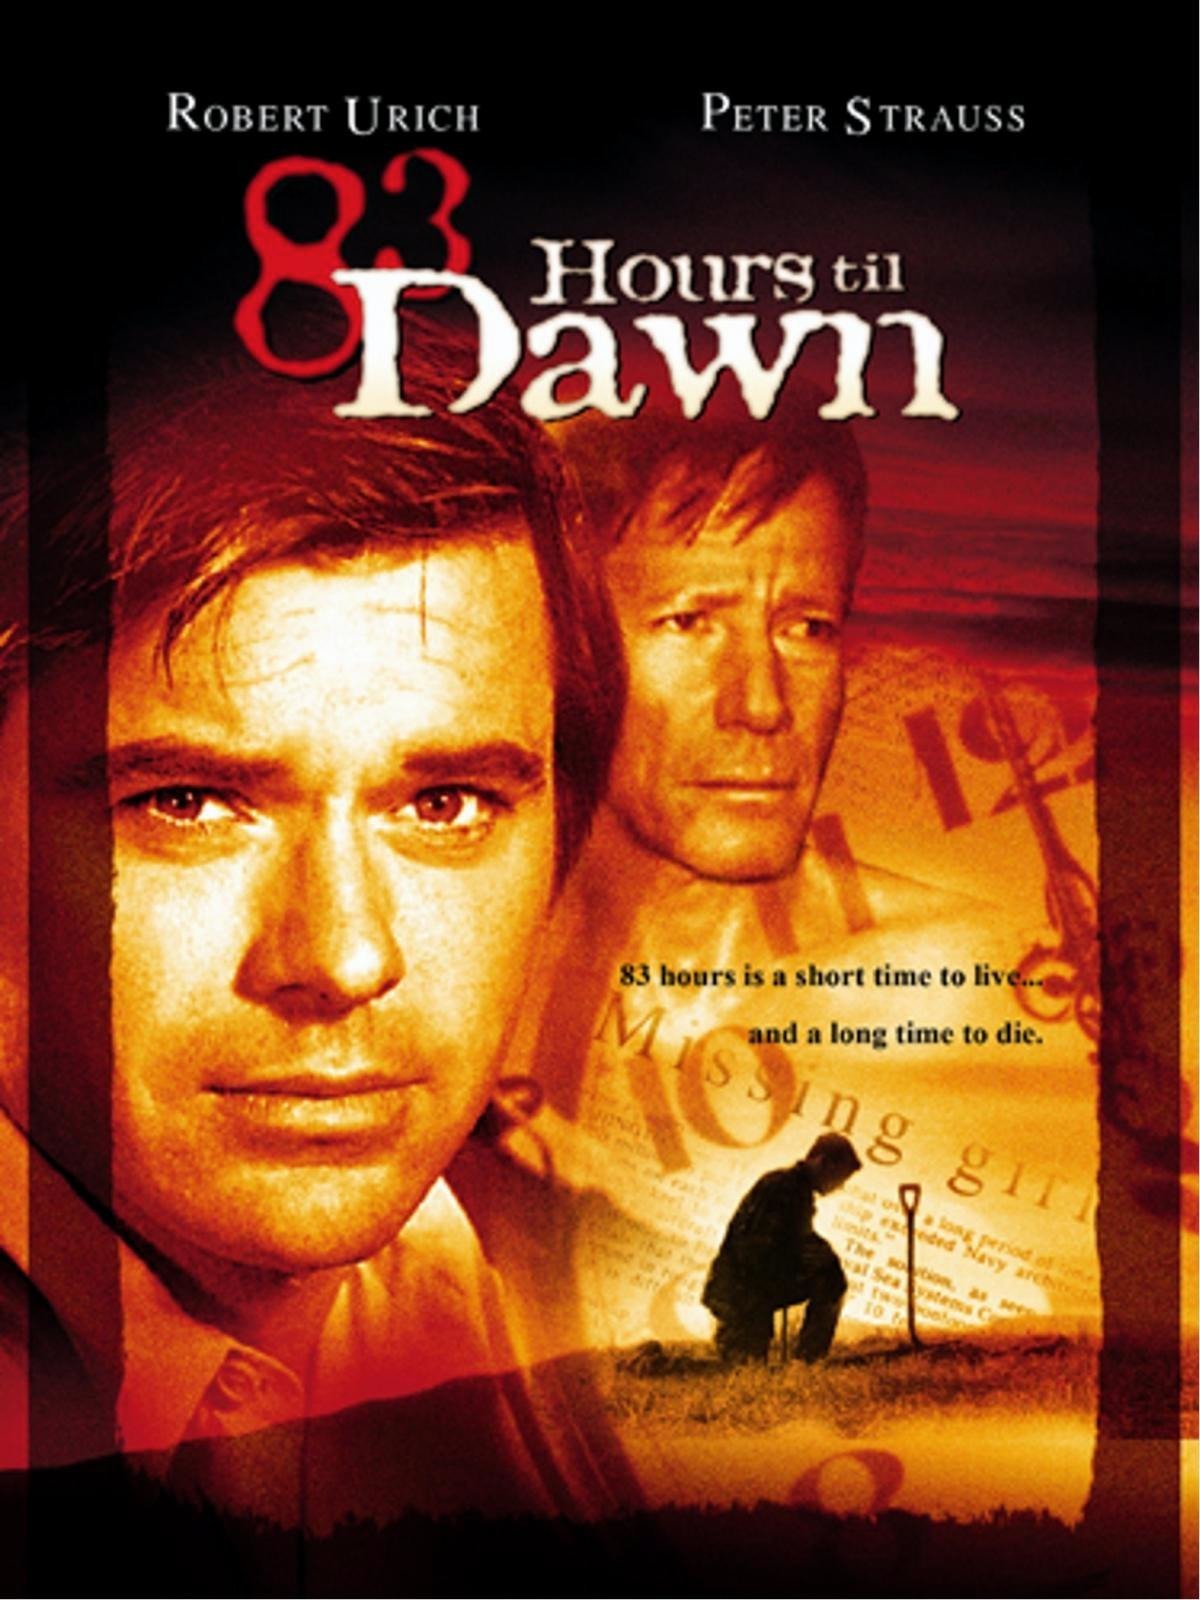 83 Hours 'Til Dawn (1990) Screenshot 1 